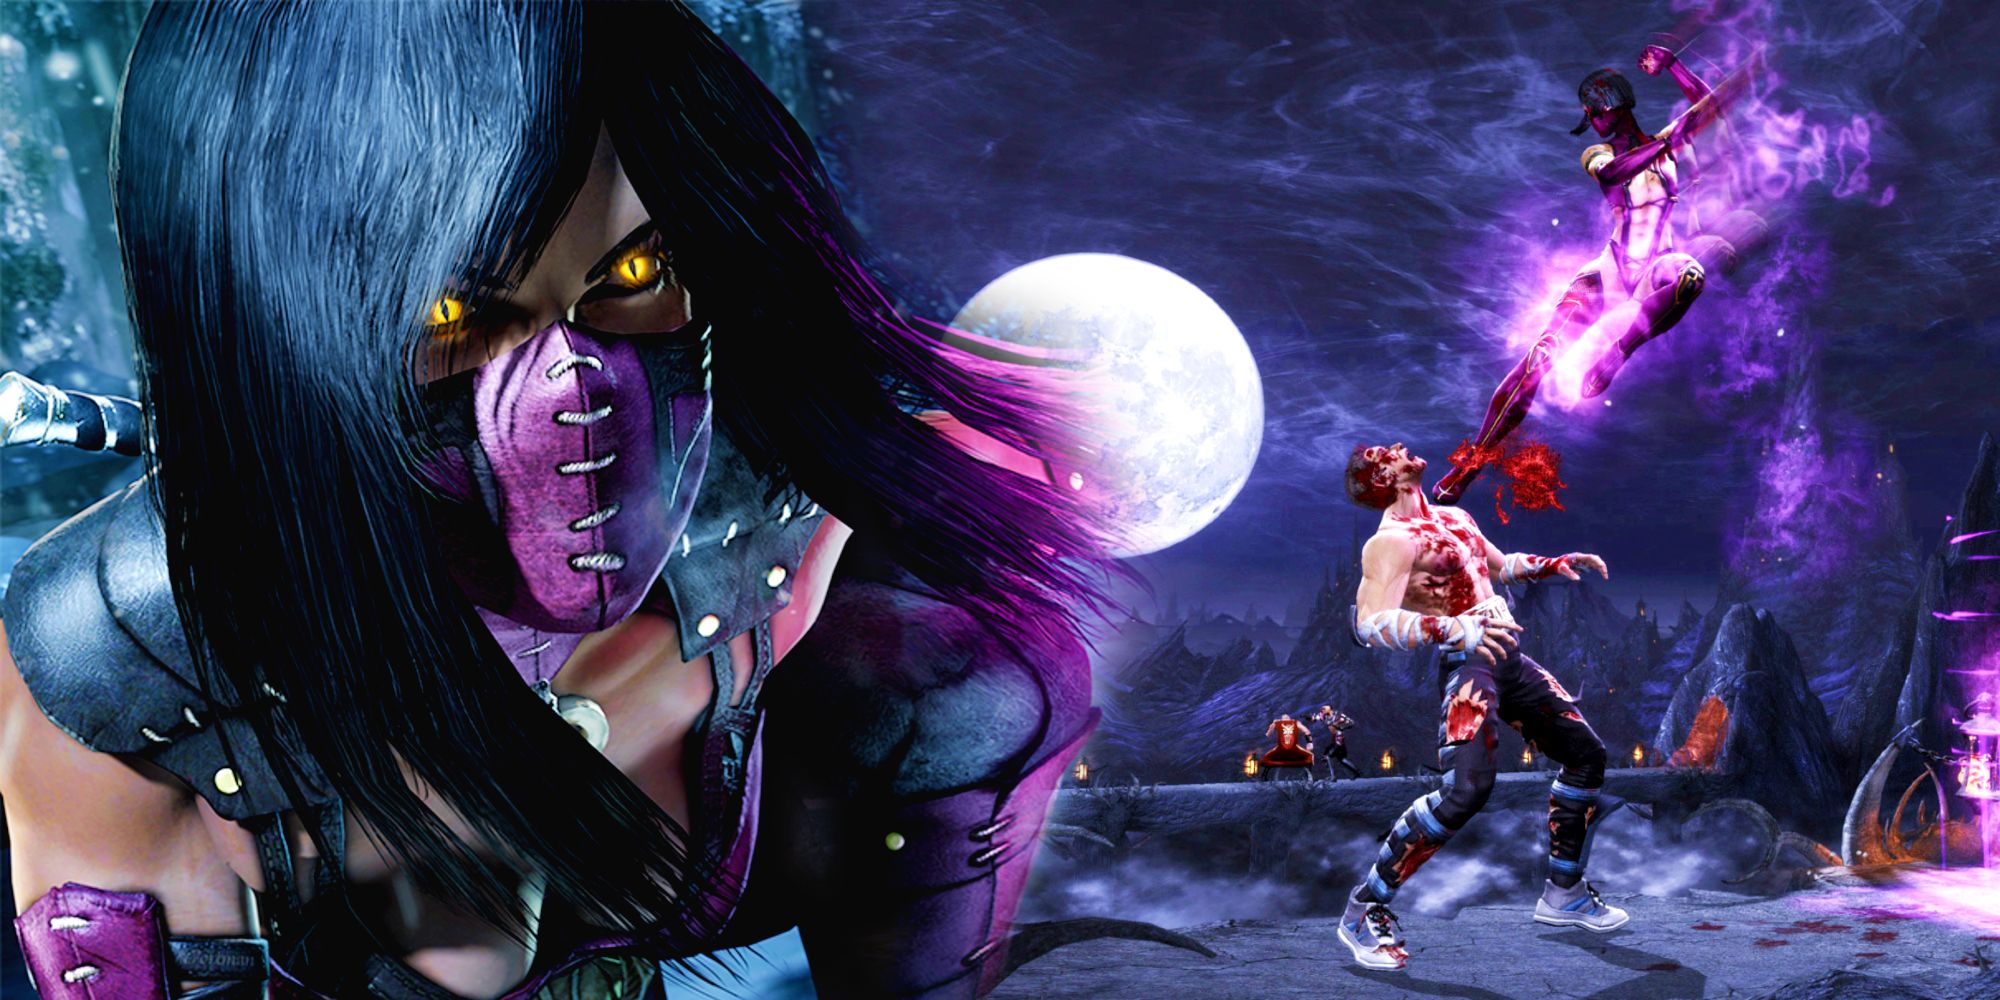 Mileena in the Mortal Kombat Video Games